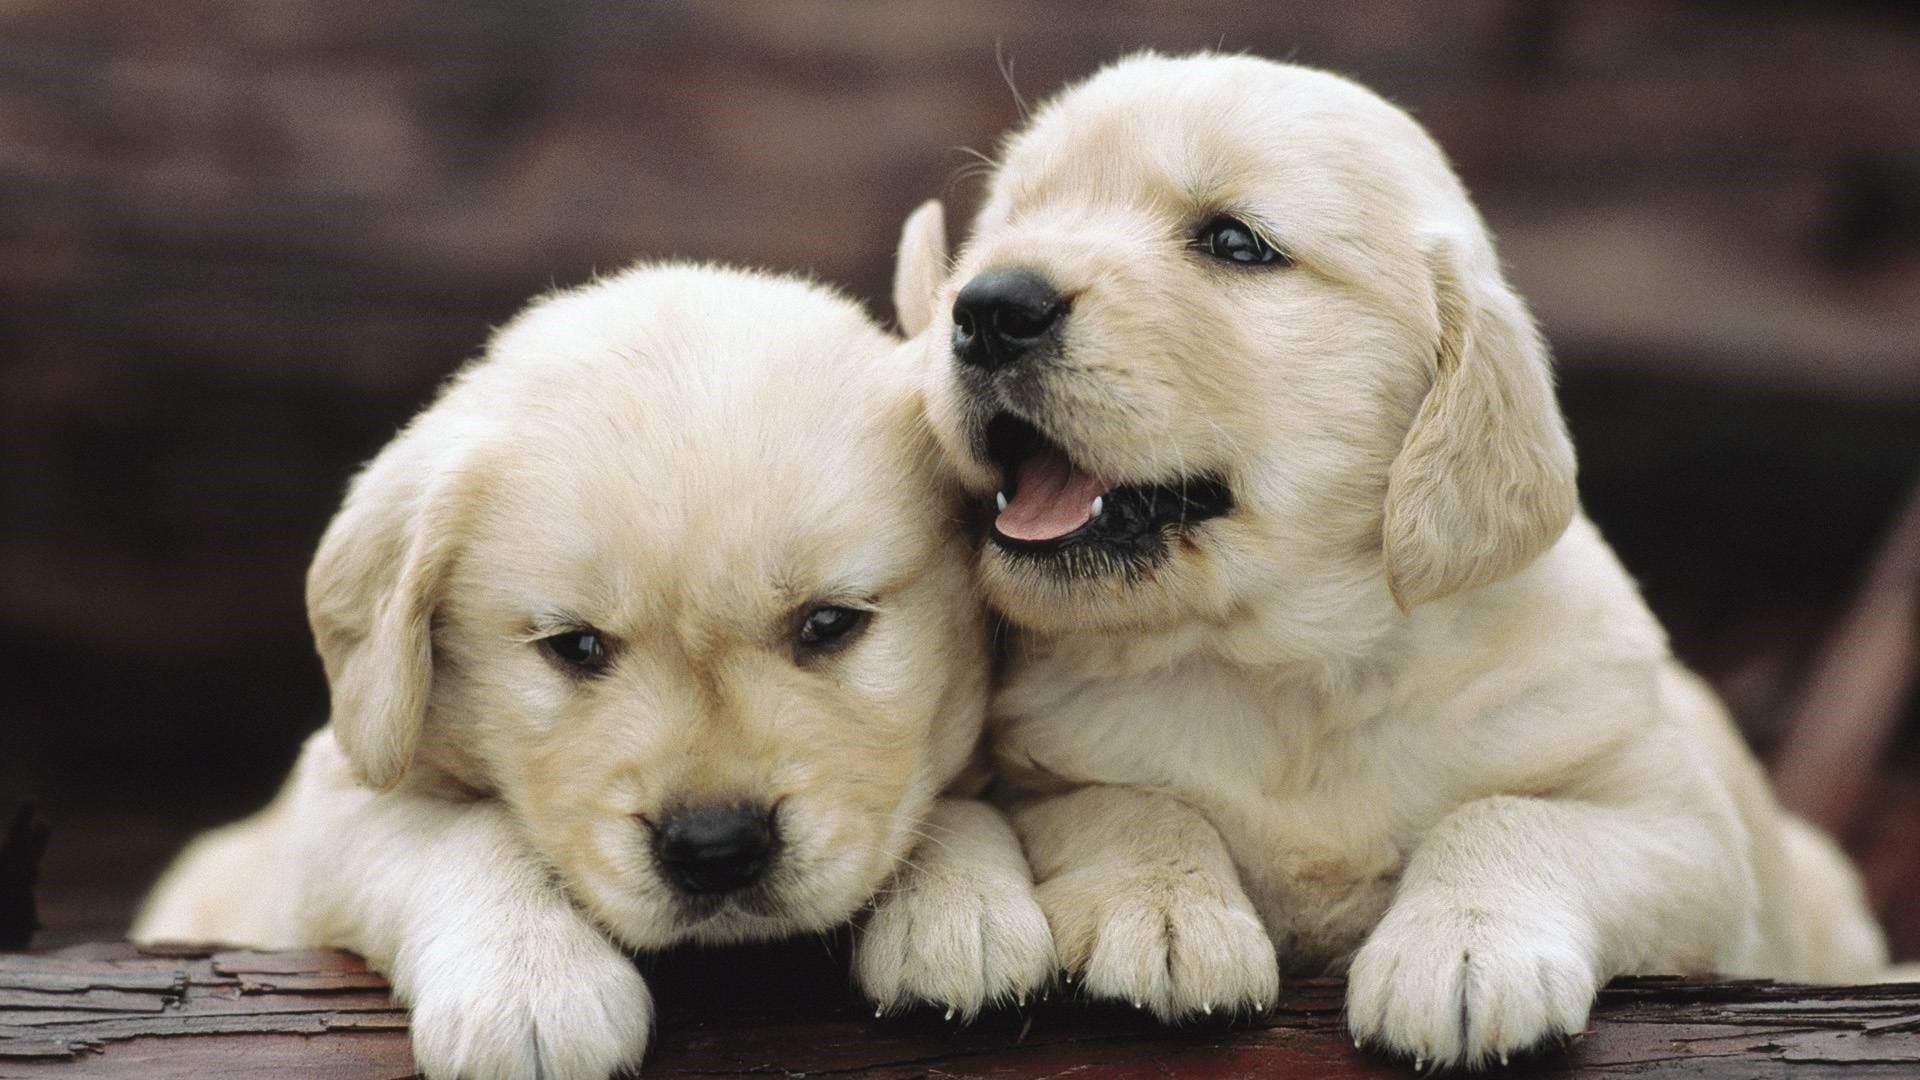 Cute, doggie, dogs, puppies wallpaper. Cute dog wallpaper, Cute puppy wallpaper, Cute puppies